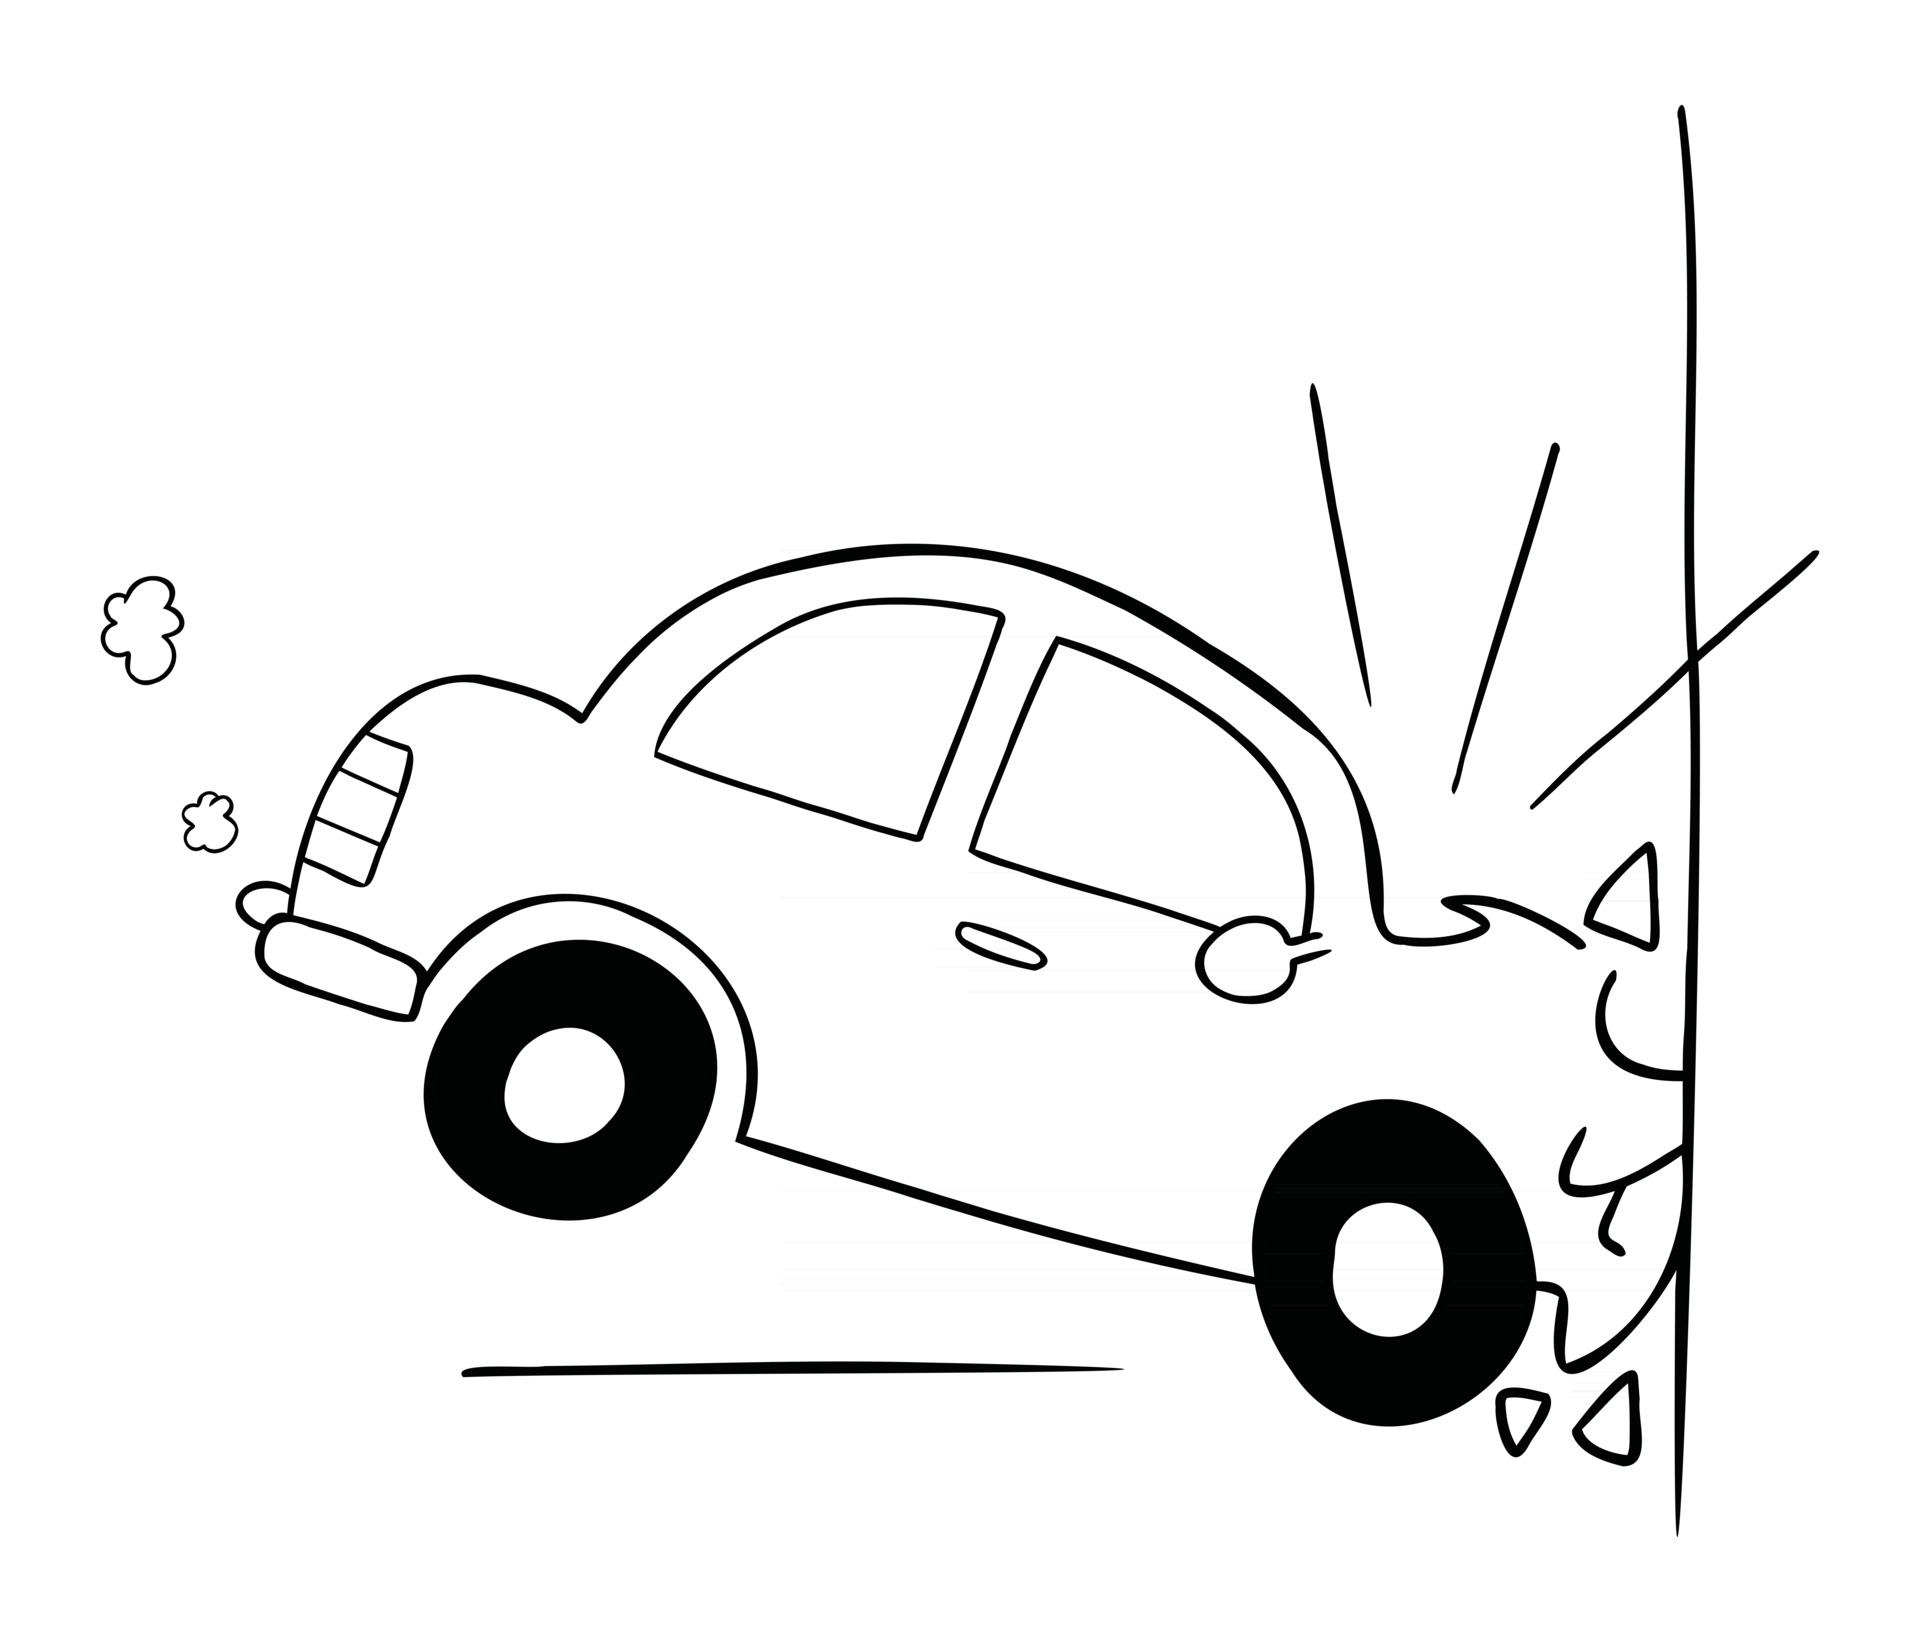 Cartoon Vector Illustration of Car Accident Crashing Into the Wall 2779909  Vector Art at Vecteezy